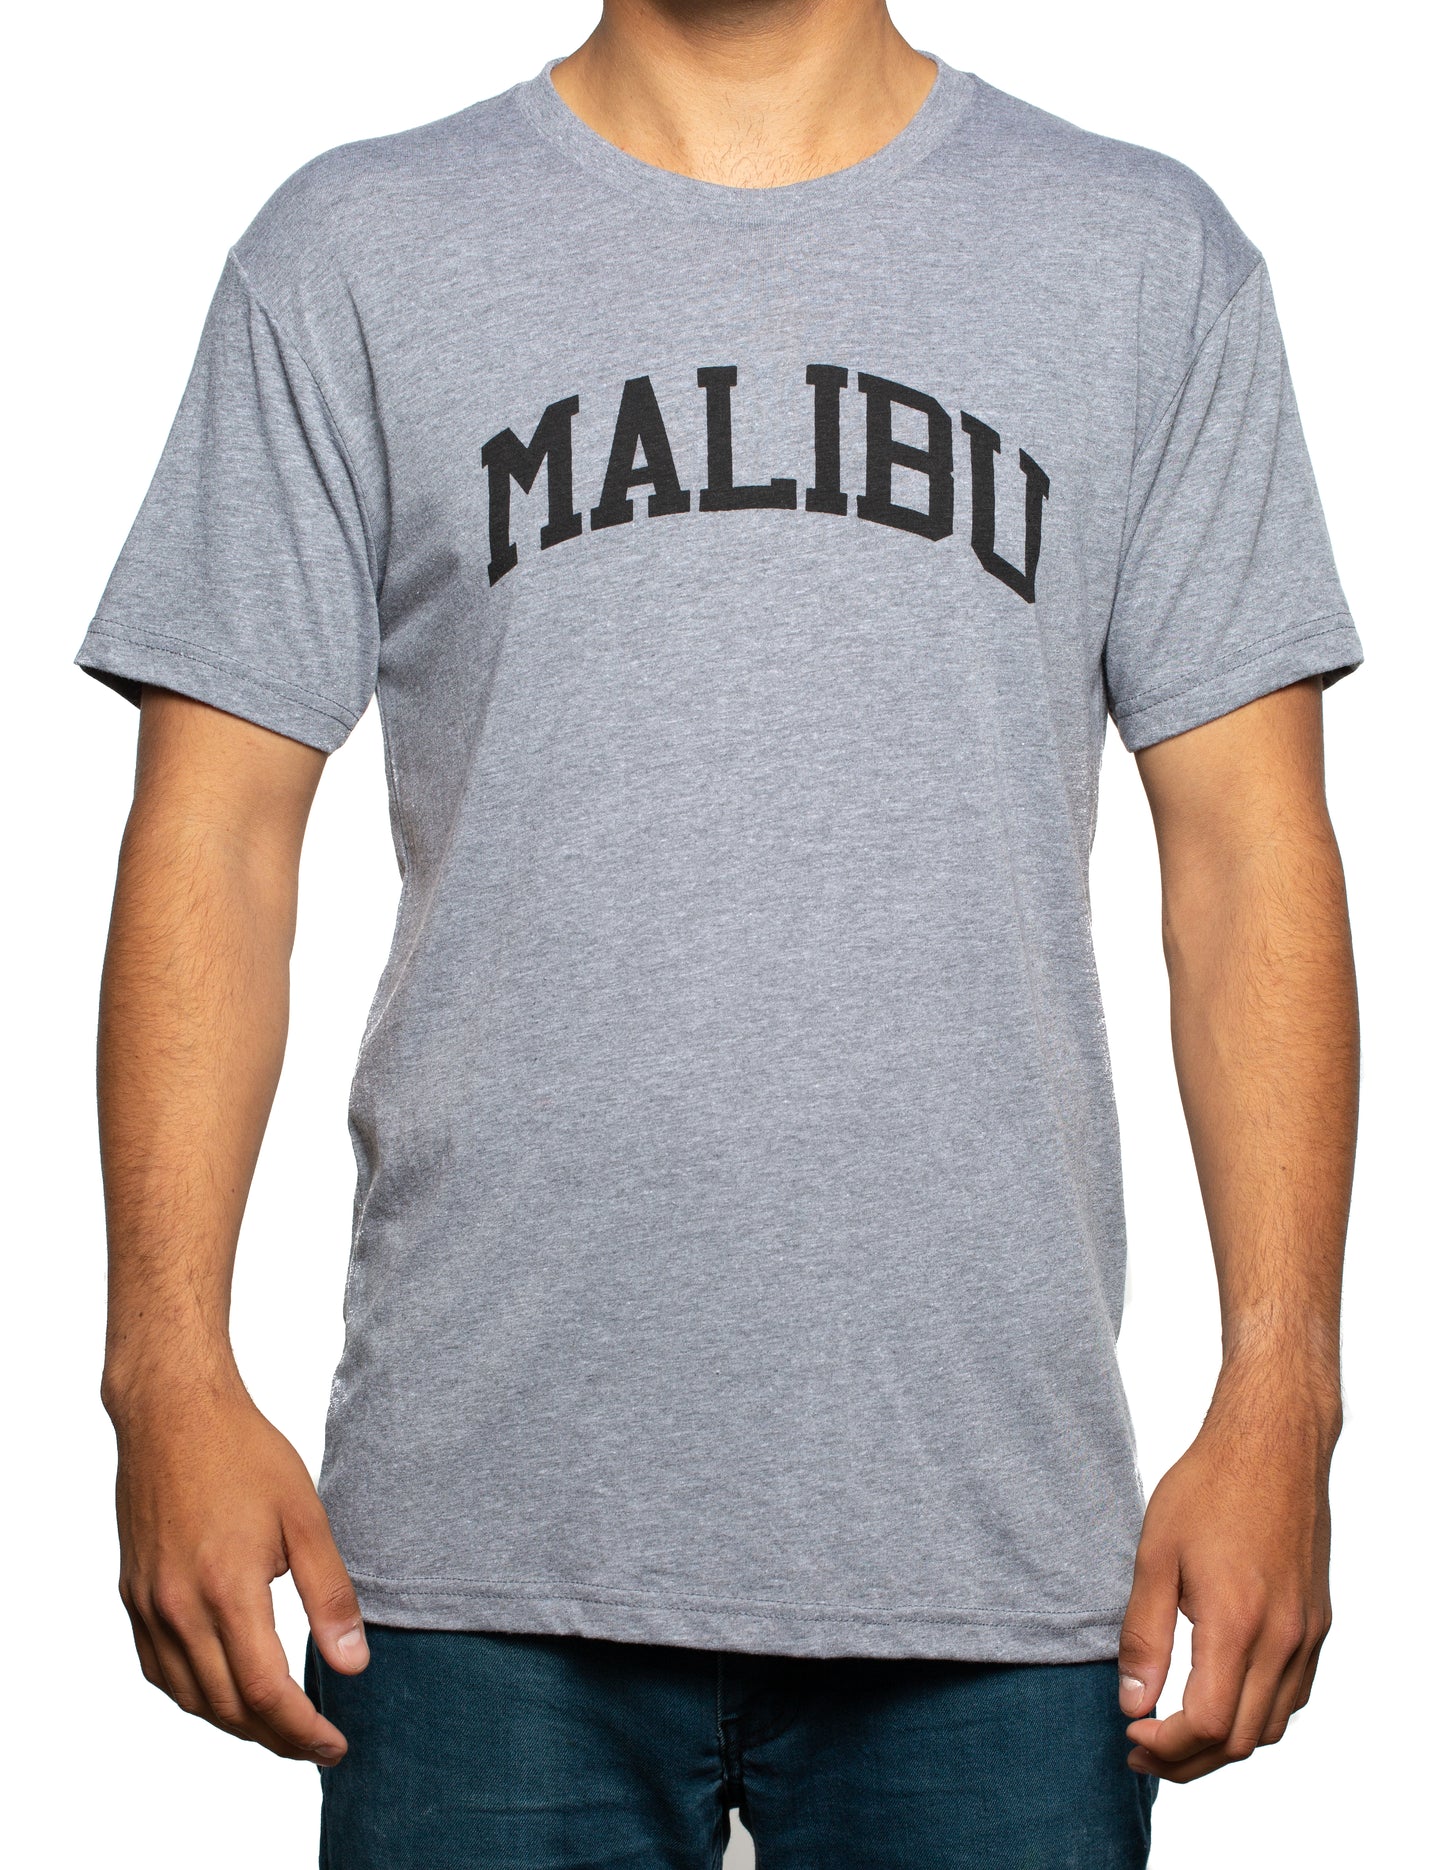 Malibu Men's Tri-Blend Tee